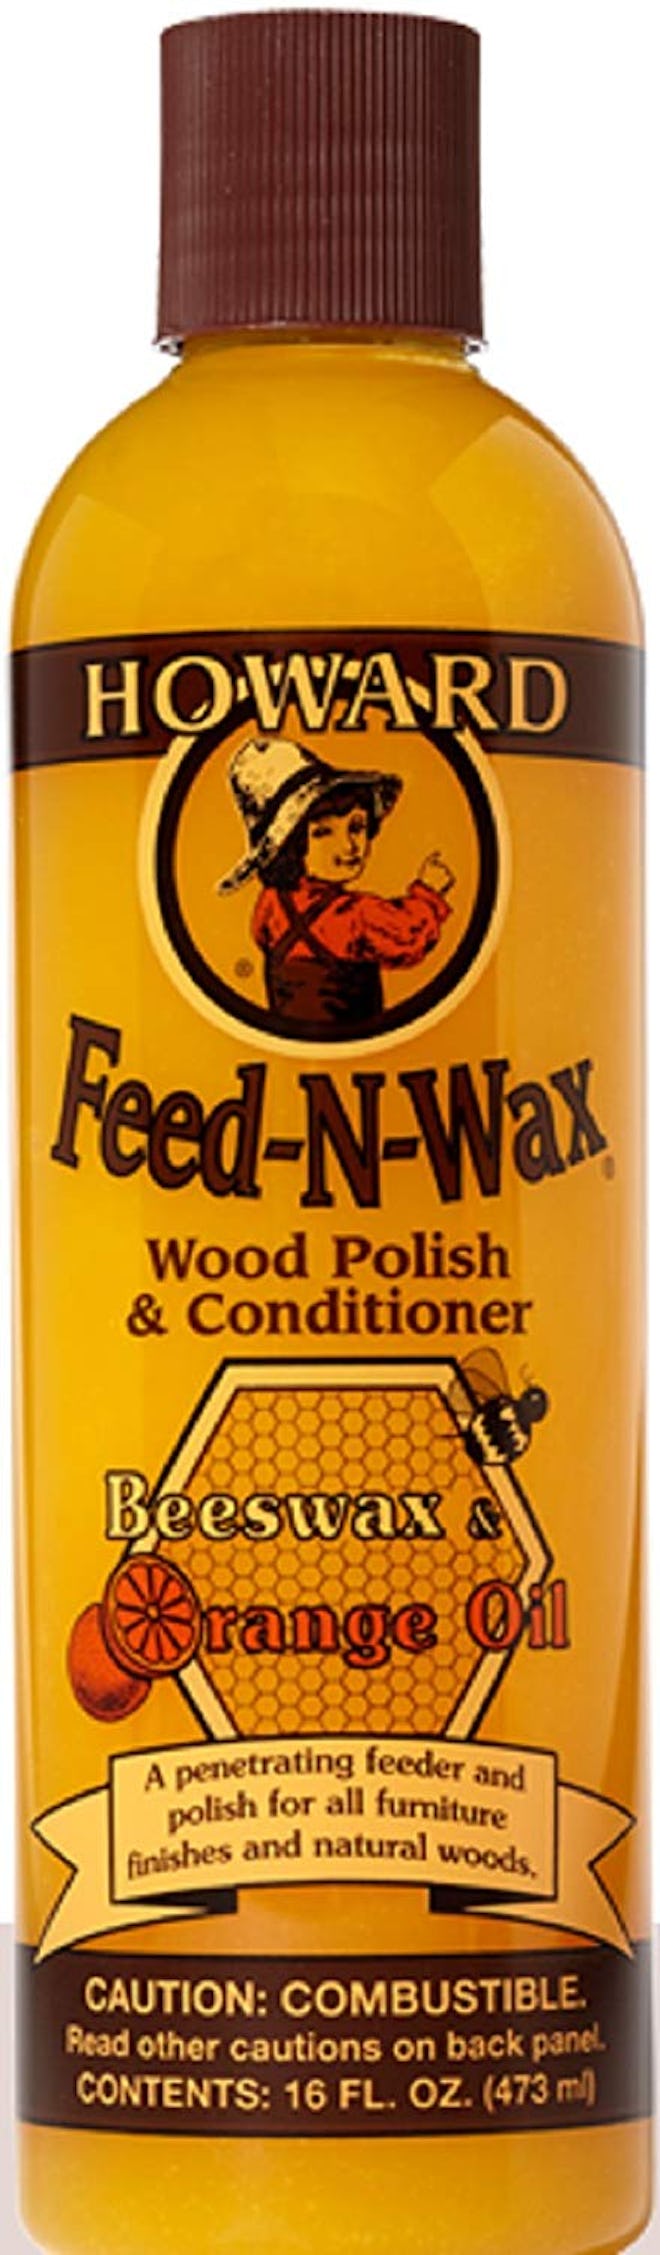 Howard Feed-N-Wax Wood Polish and Conditioner